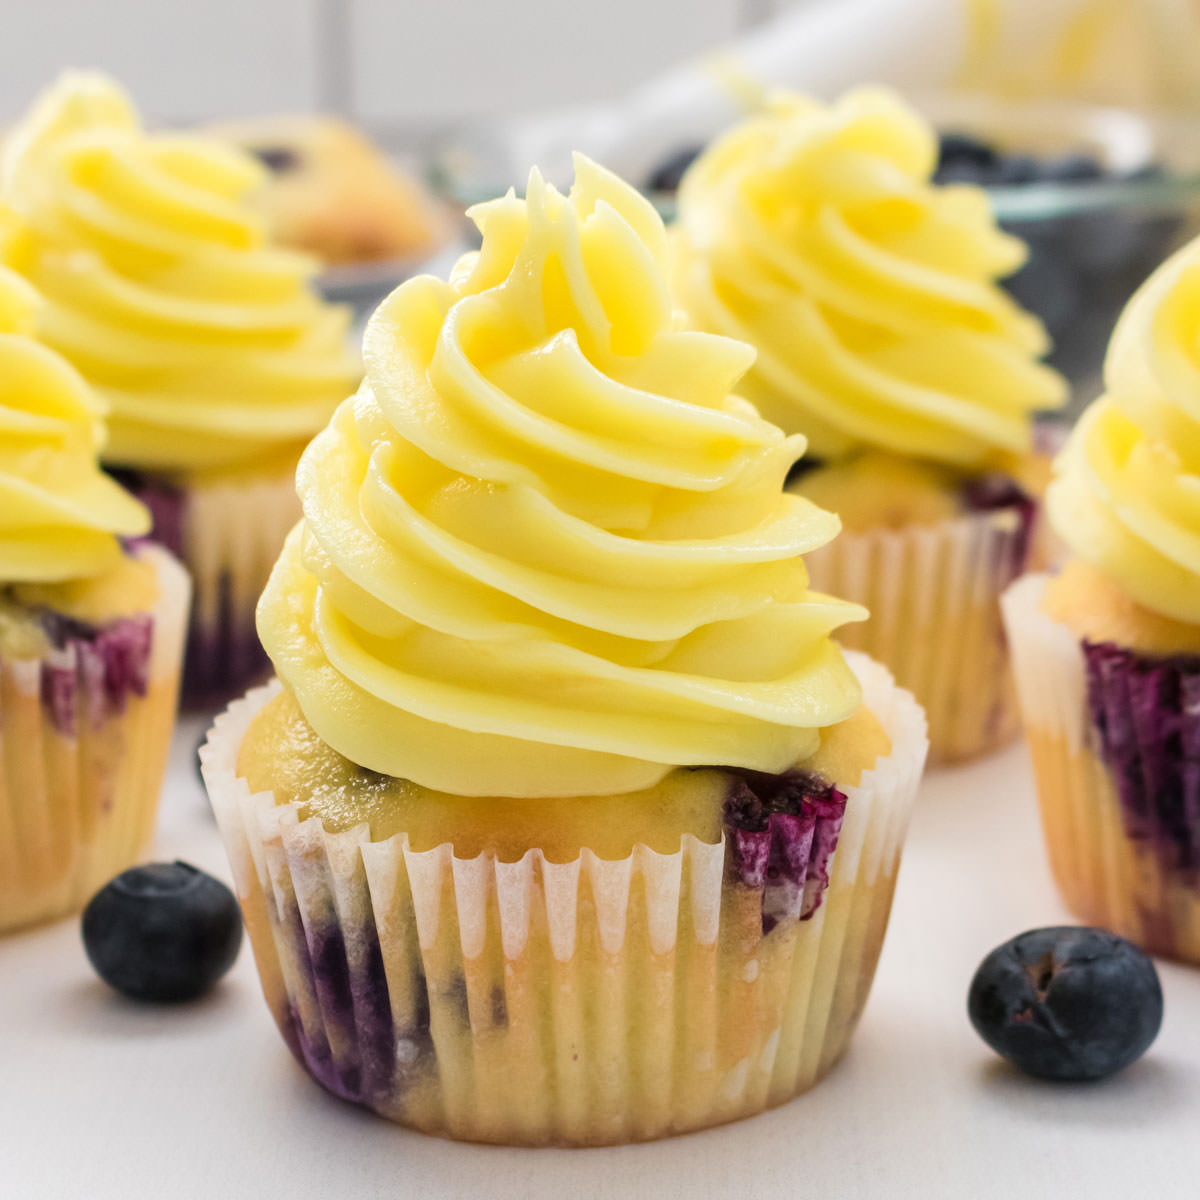 I Tried Ina Garten's Blueberry Muffin Recipe | The Kitchn